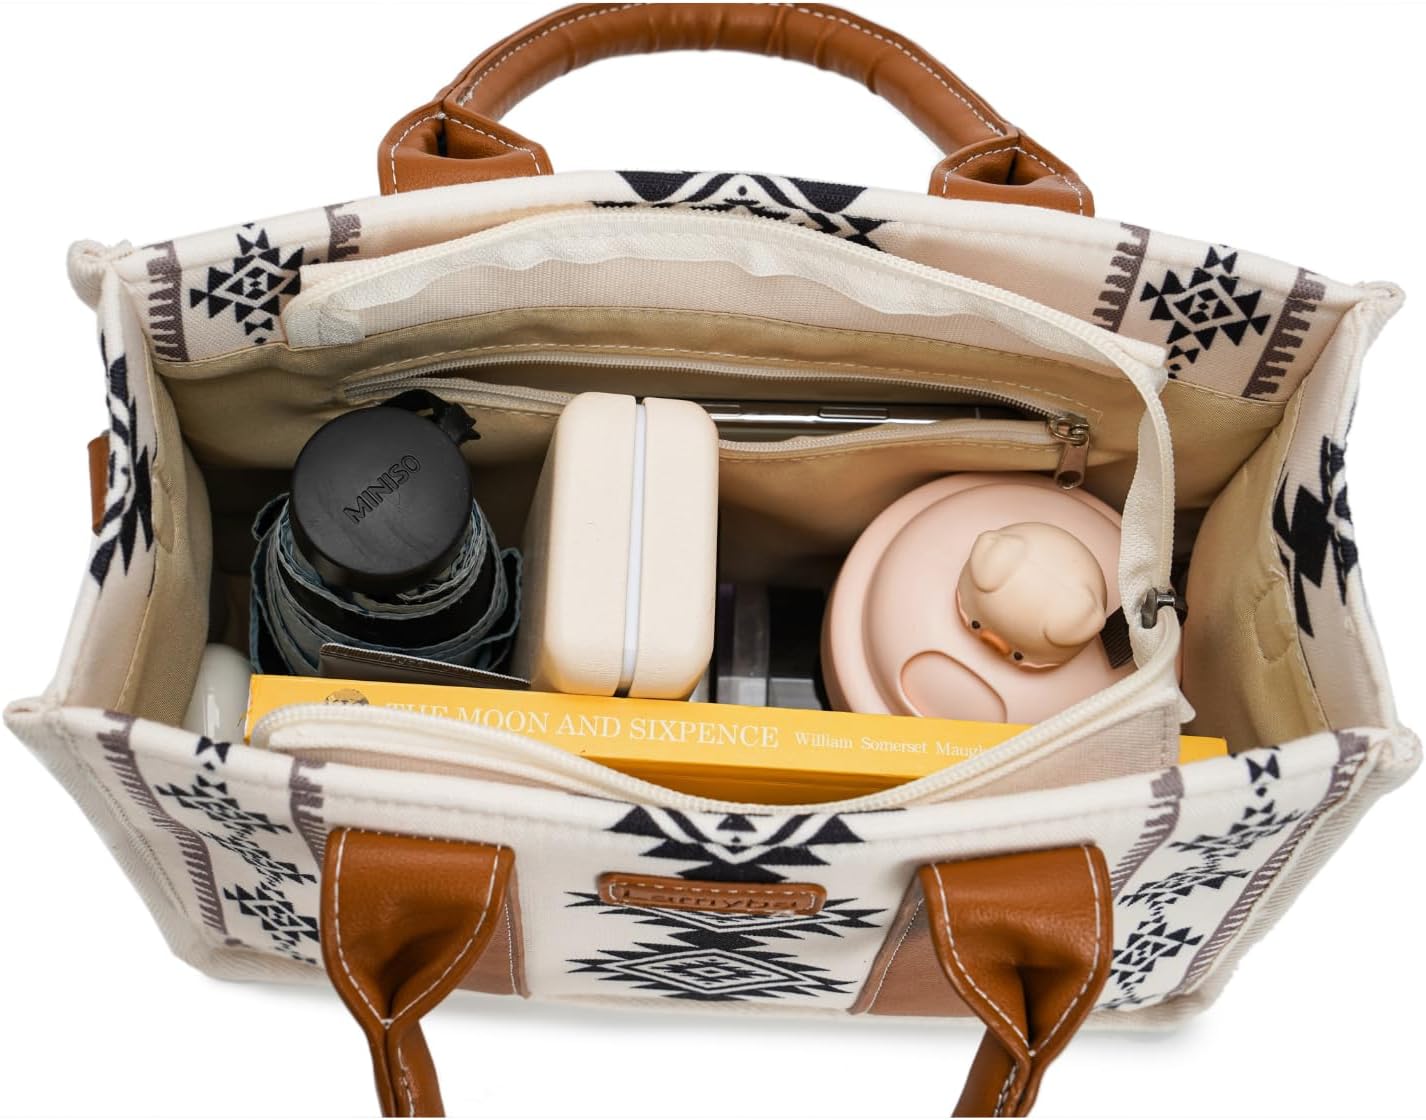 Lamyba Small Tote Bag Western Purses for Women Shoulder Boho Aztec Handbags